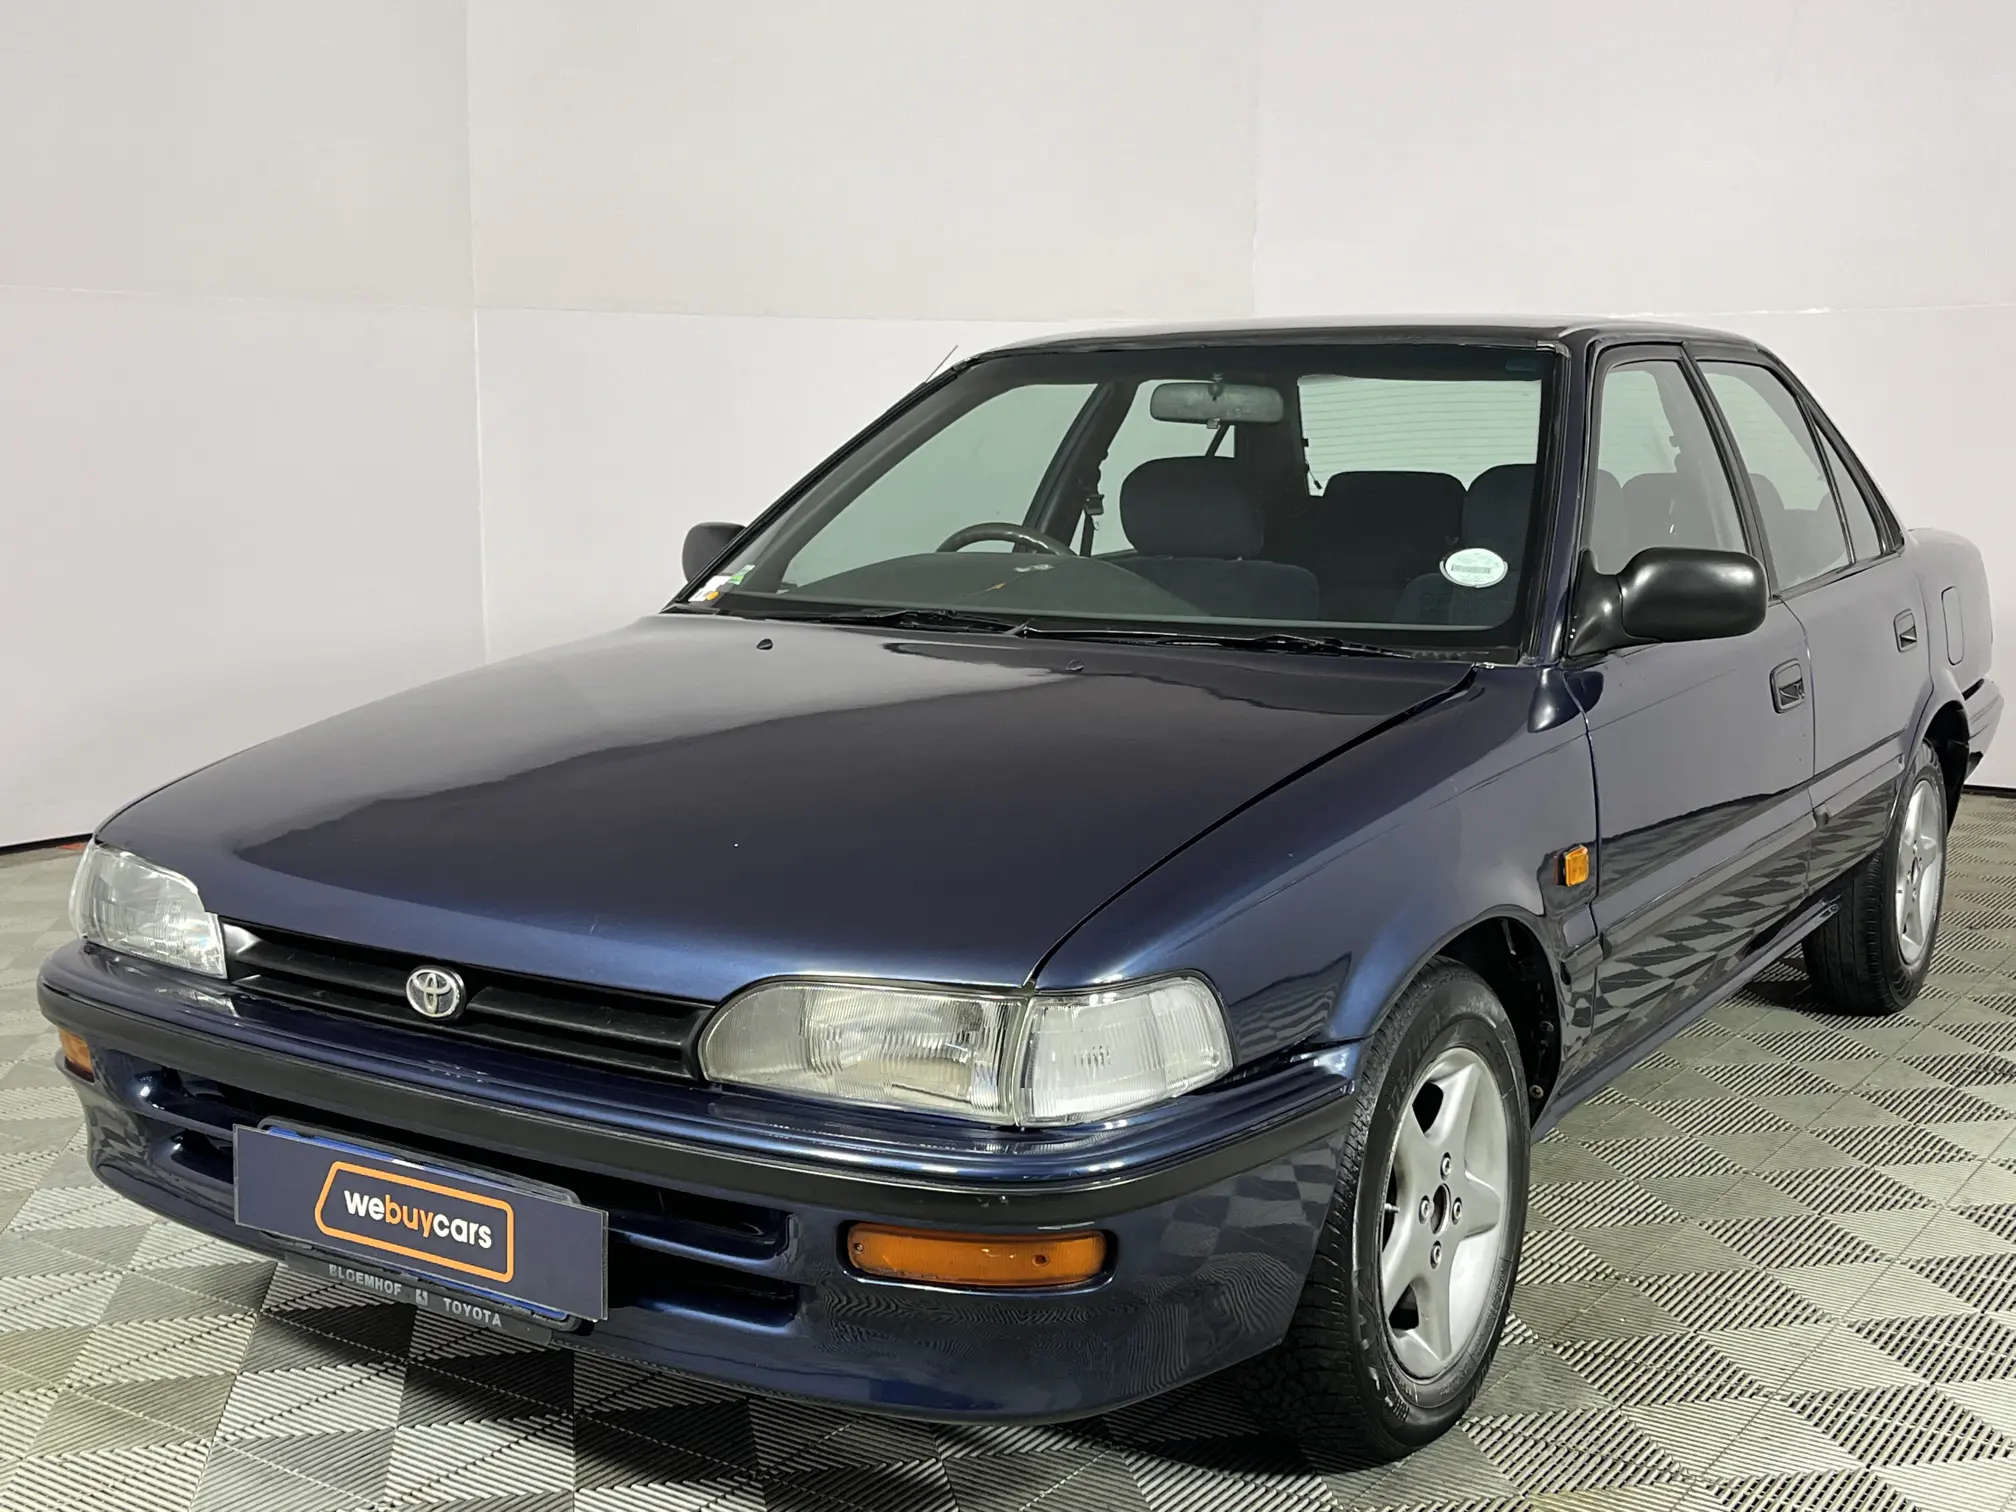 1996 Toyota Corolla 160i GLE P/S Auto